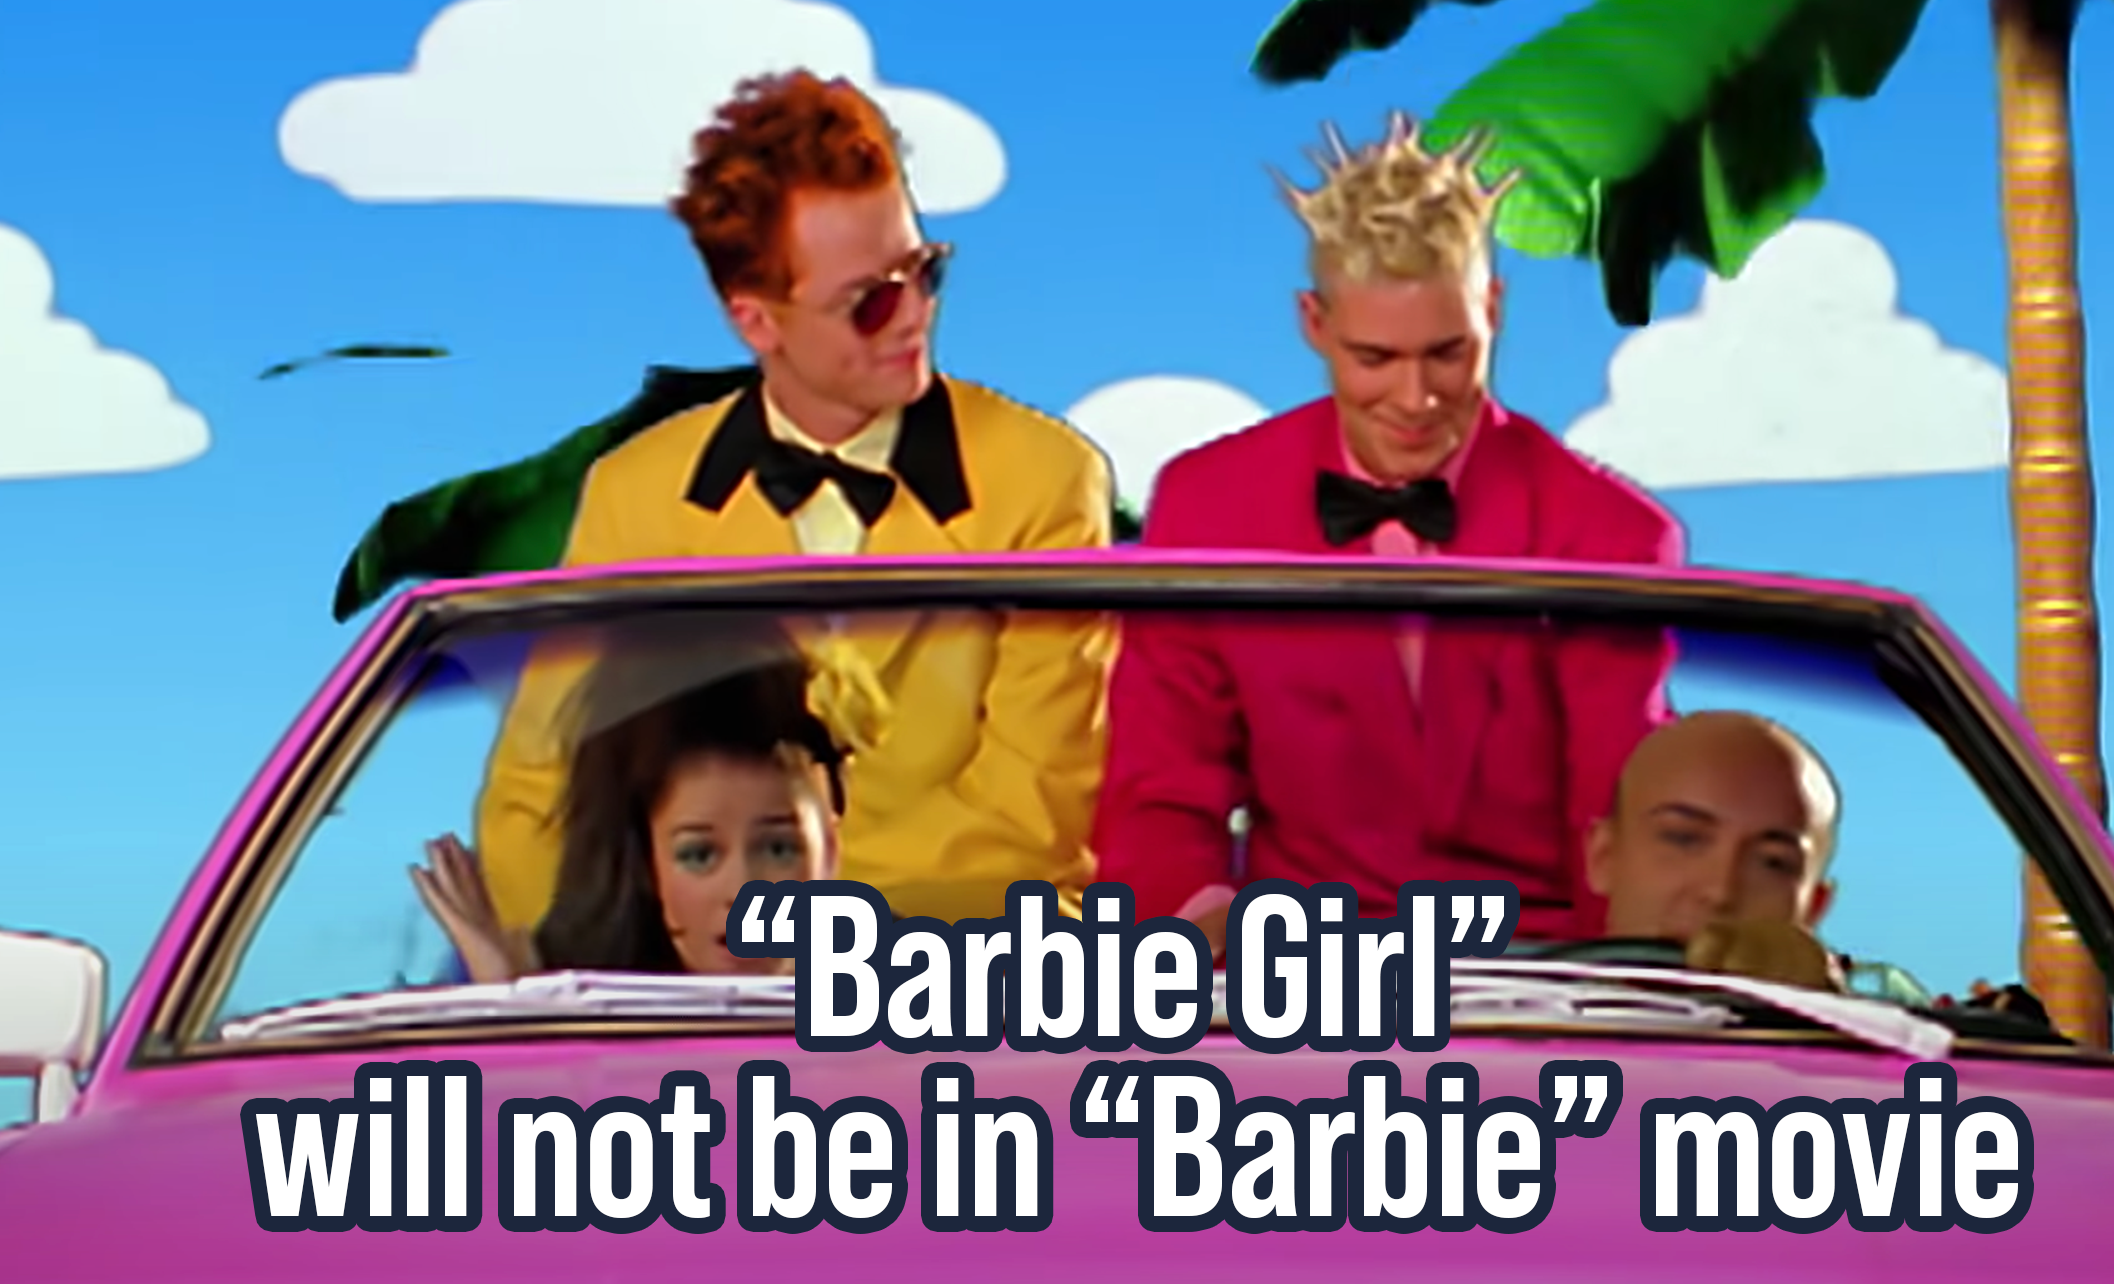 “Barbie Girl” will not be in Barbie movie